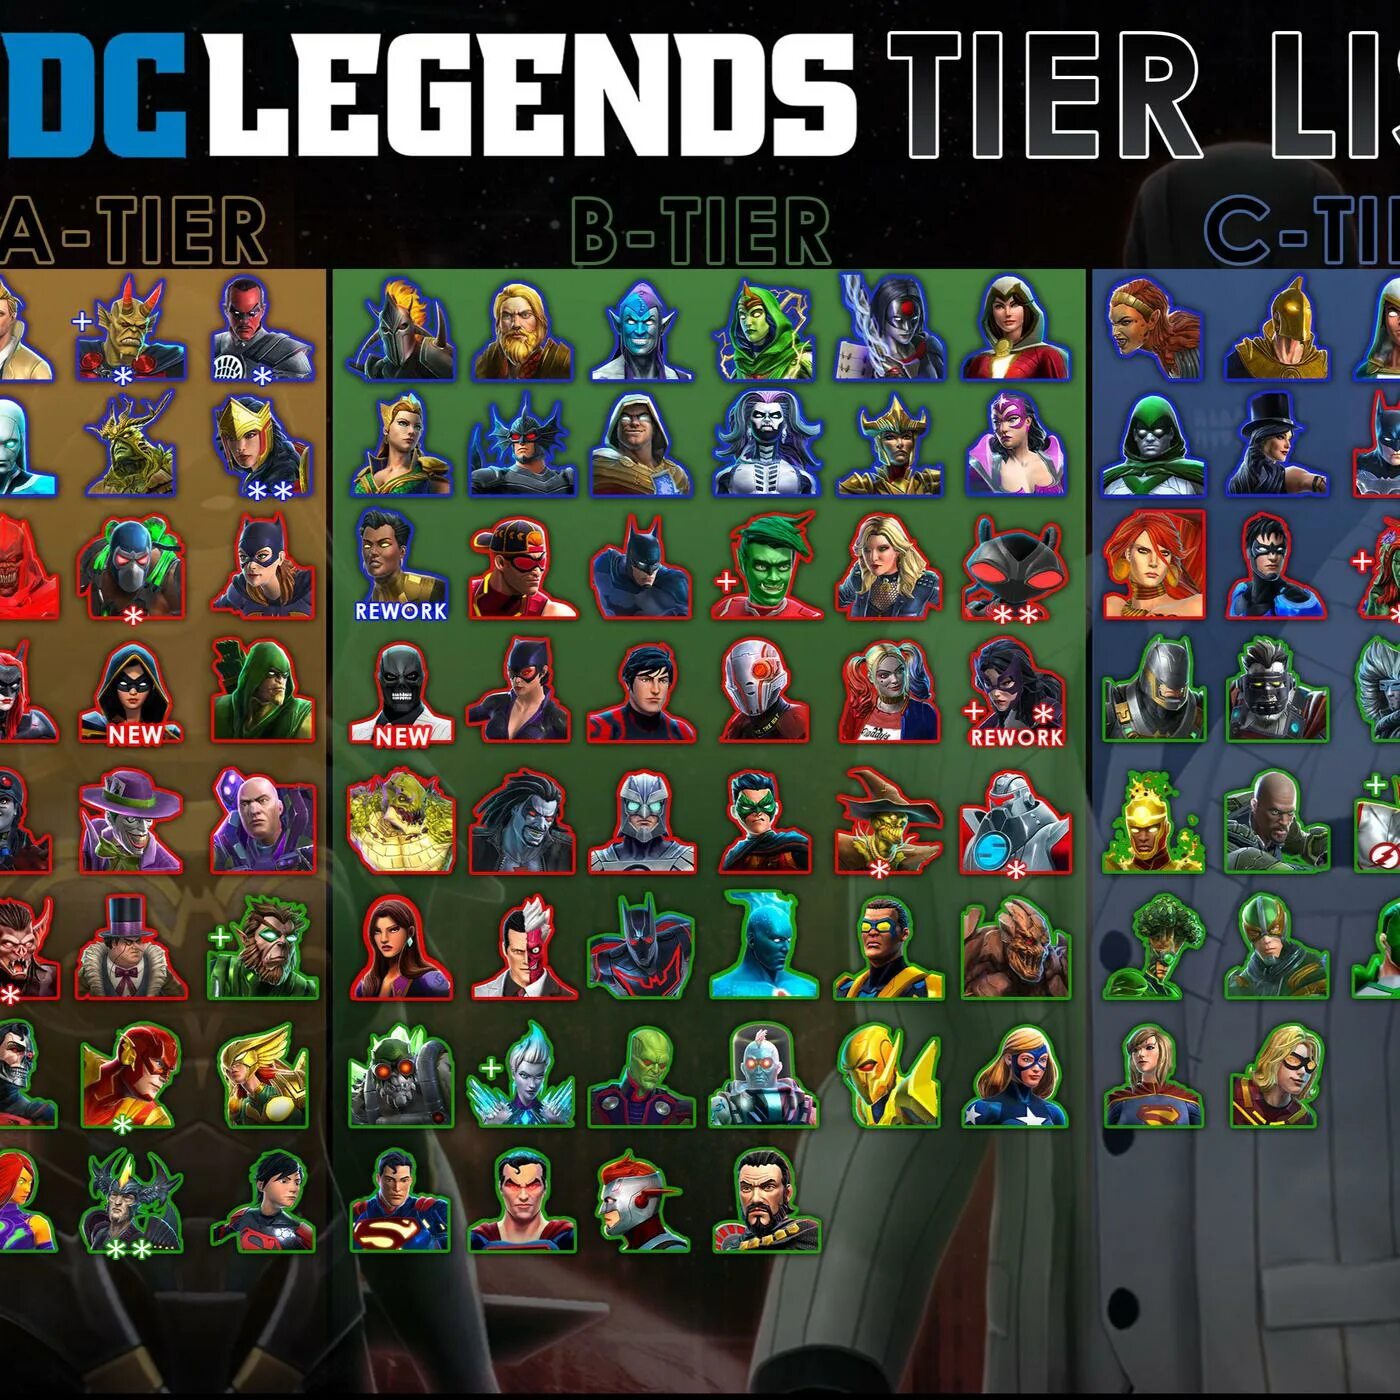 Ml Adventure тир лист героев. Тир лист героев mobile Legends Adventure. DC Legends Tier list. Тир лист мобайл легенд адвентуре.